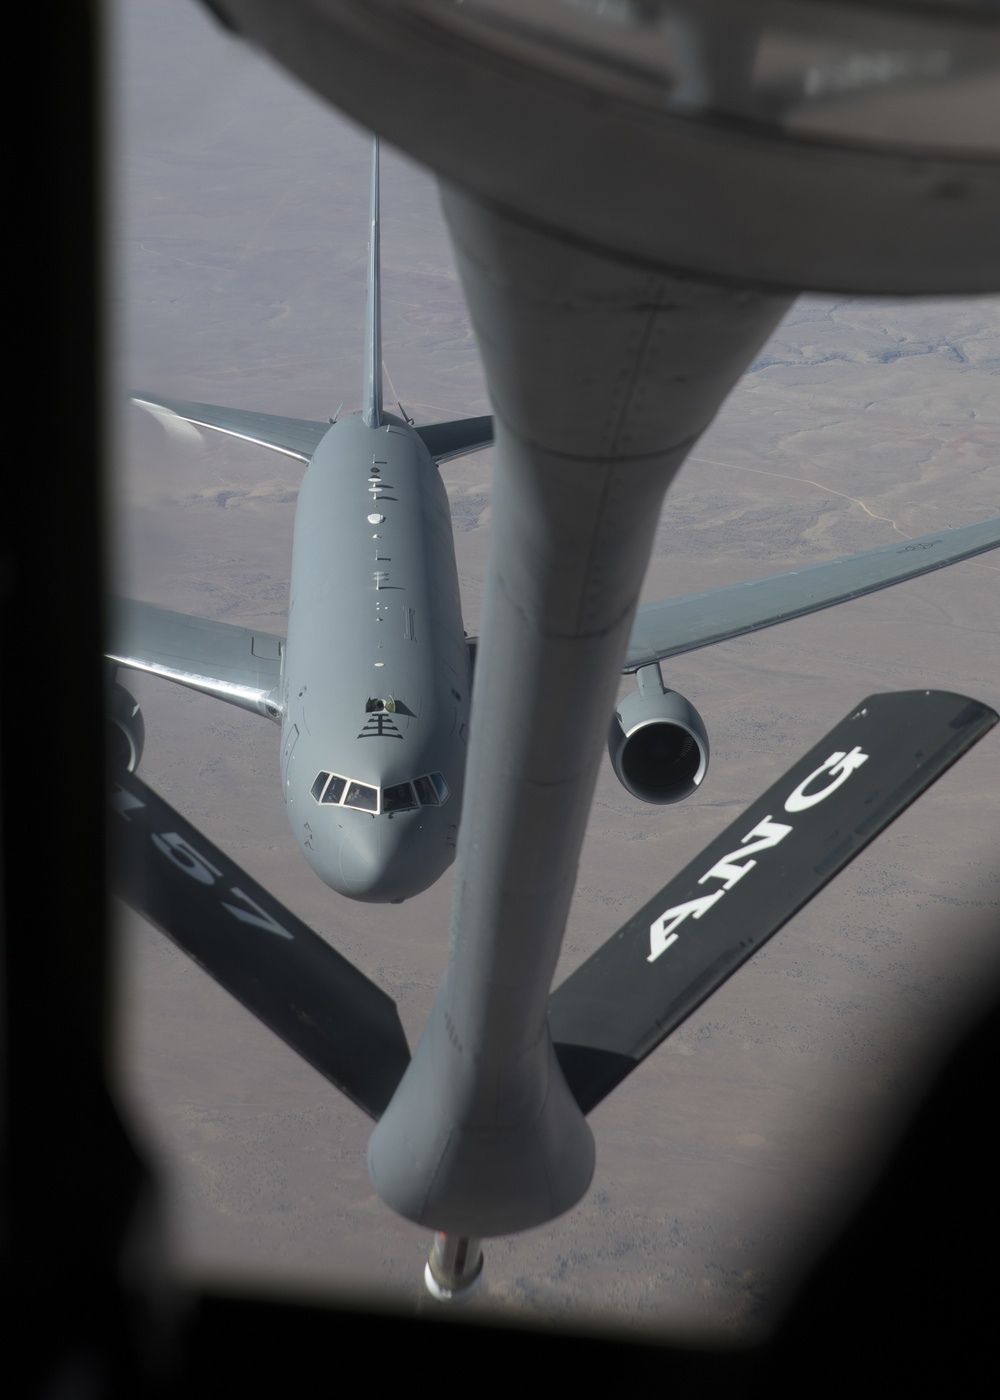 UTANG provides air refueling training to KC-46 crew